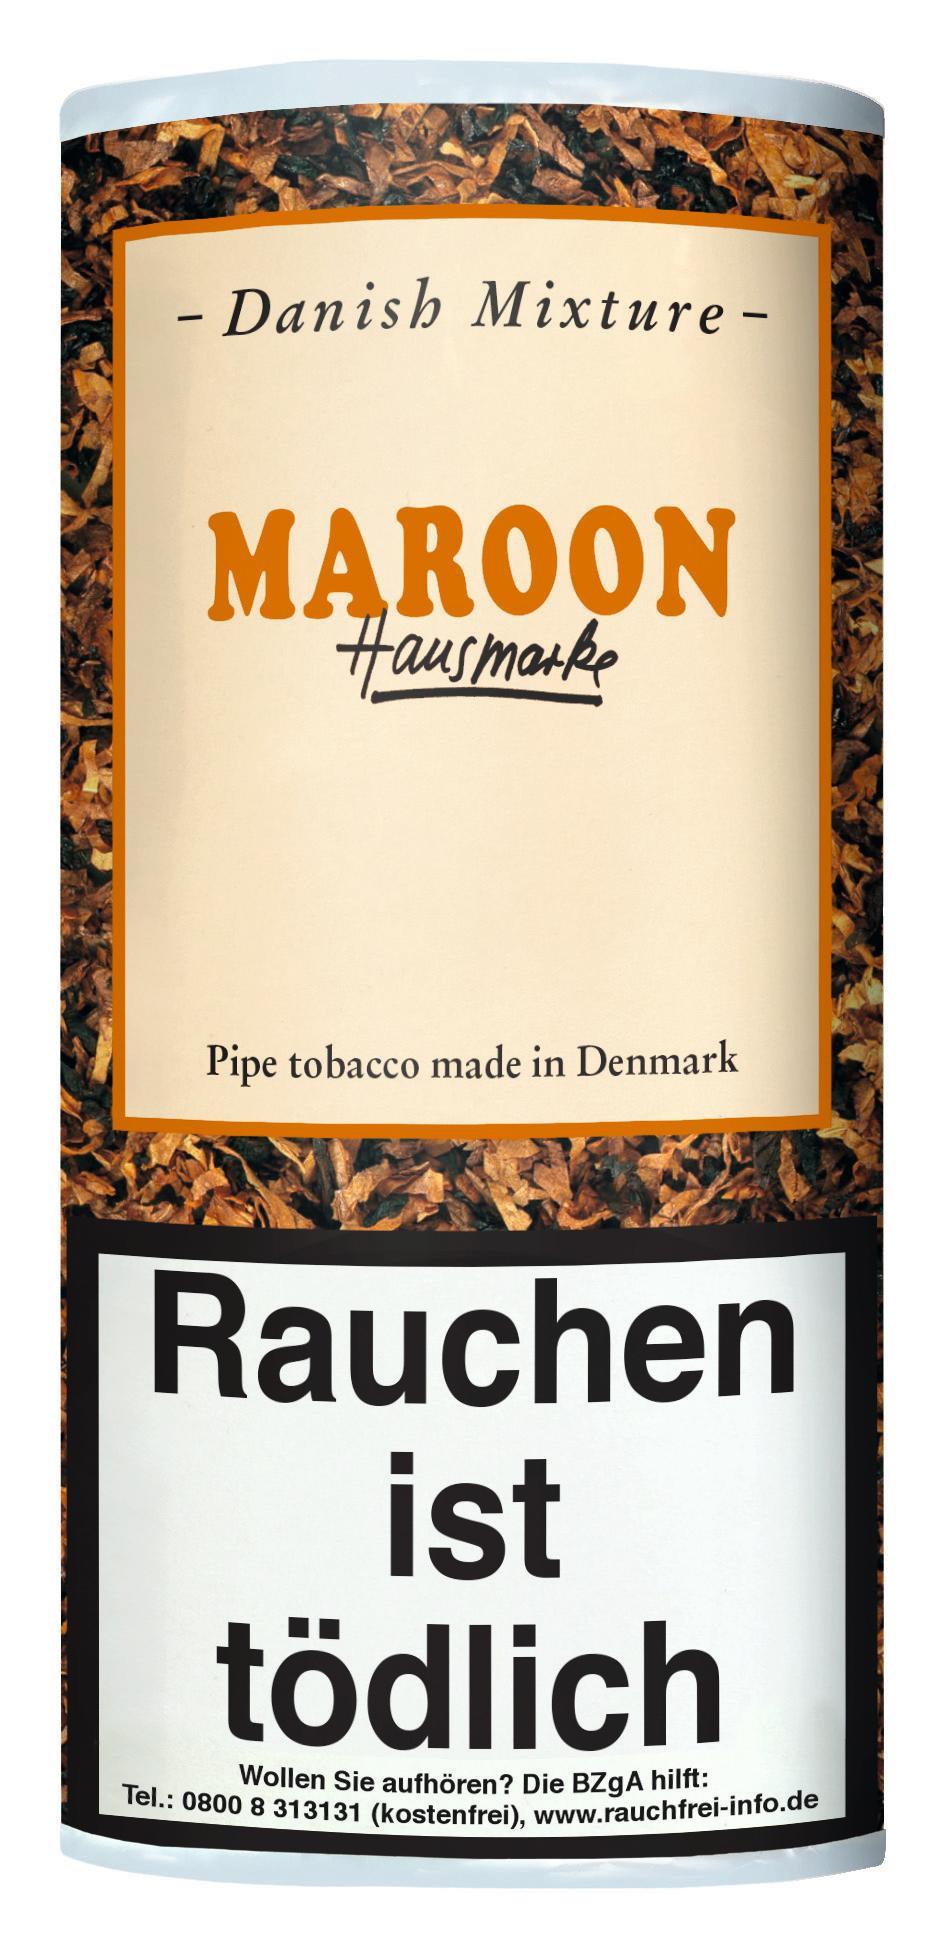 Danish Mixture Maroon Pfeifentabak 1 x 50g Krüll